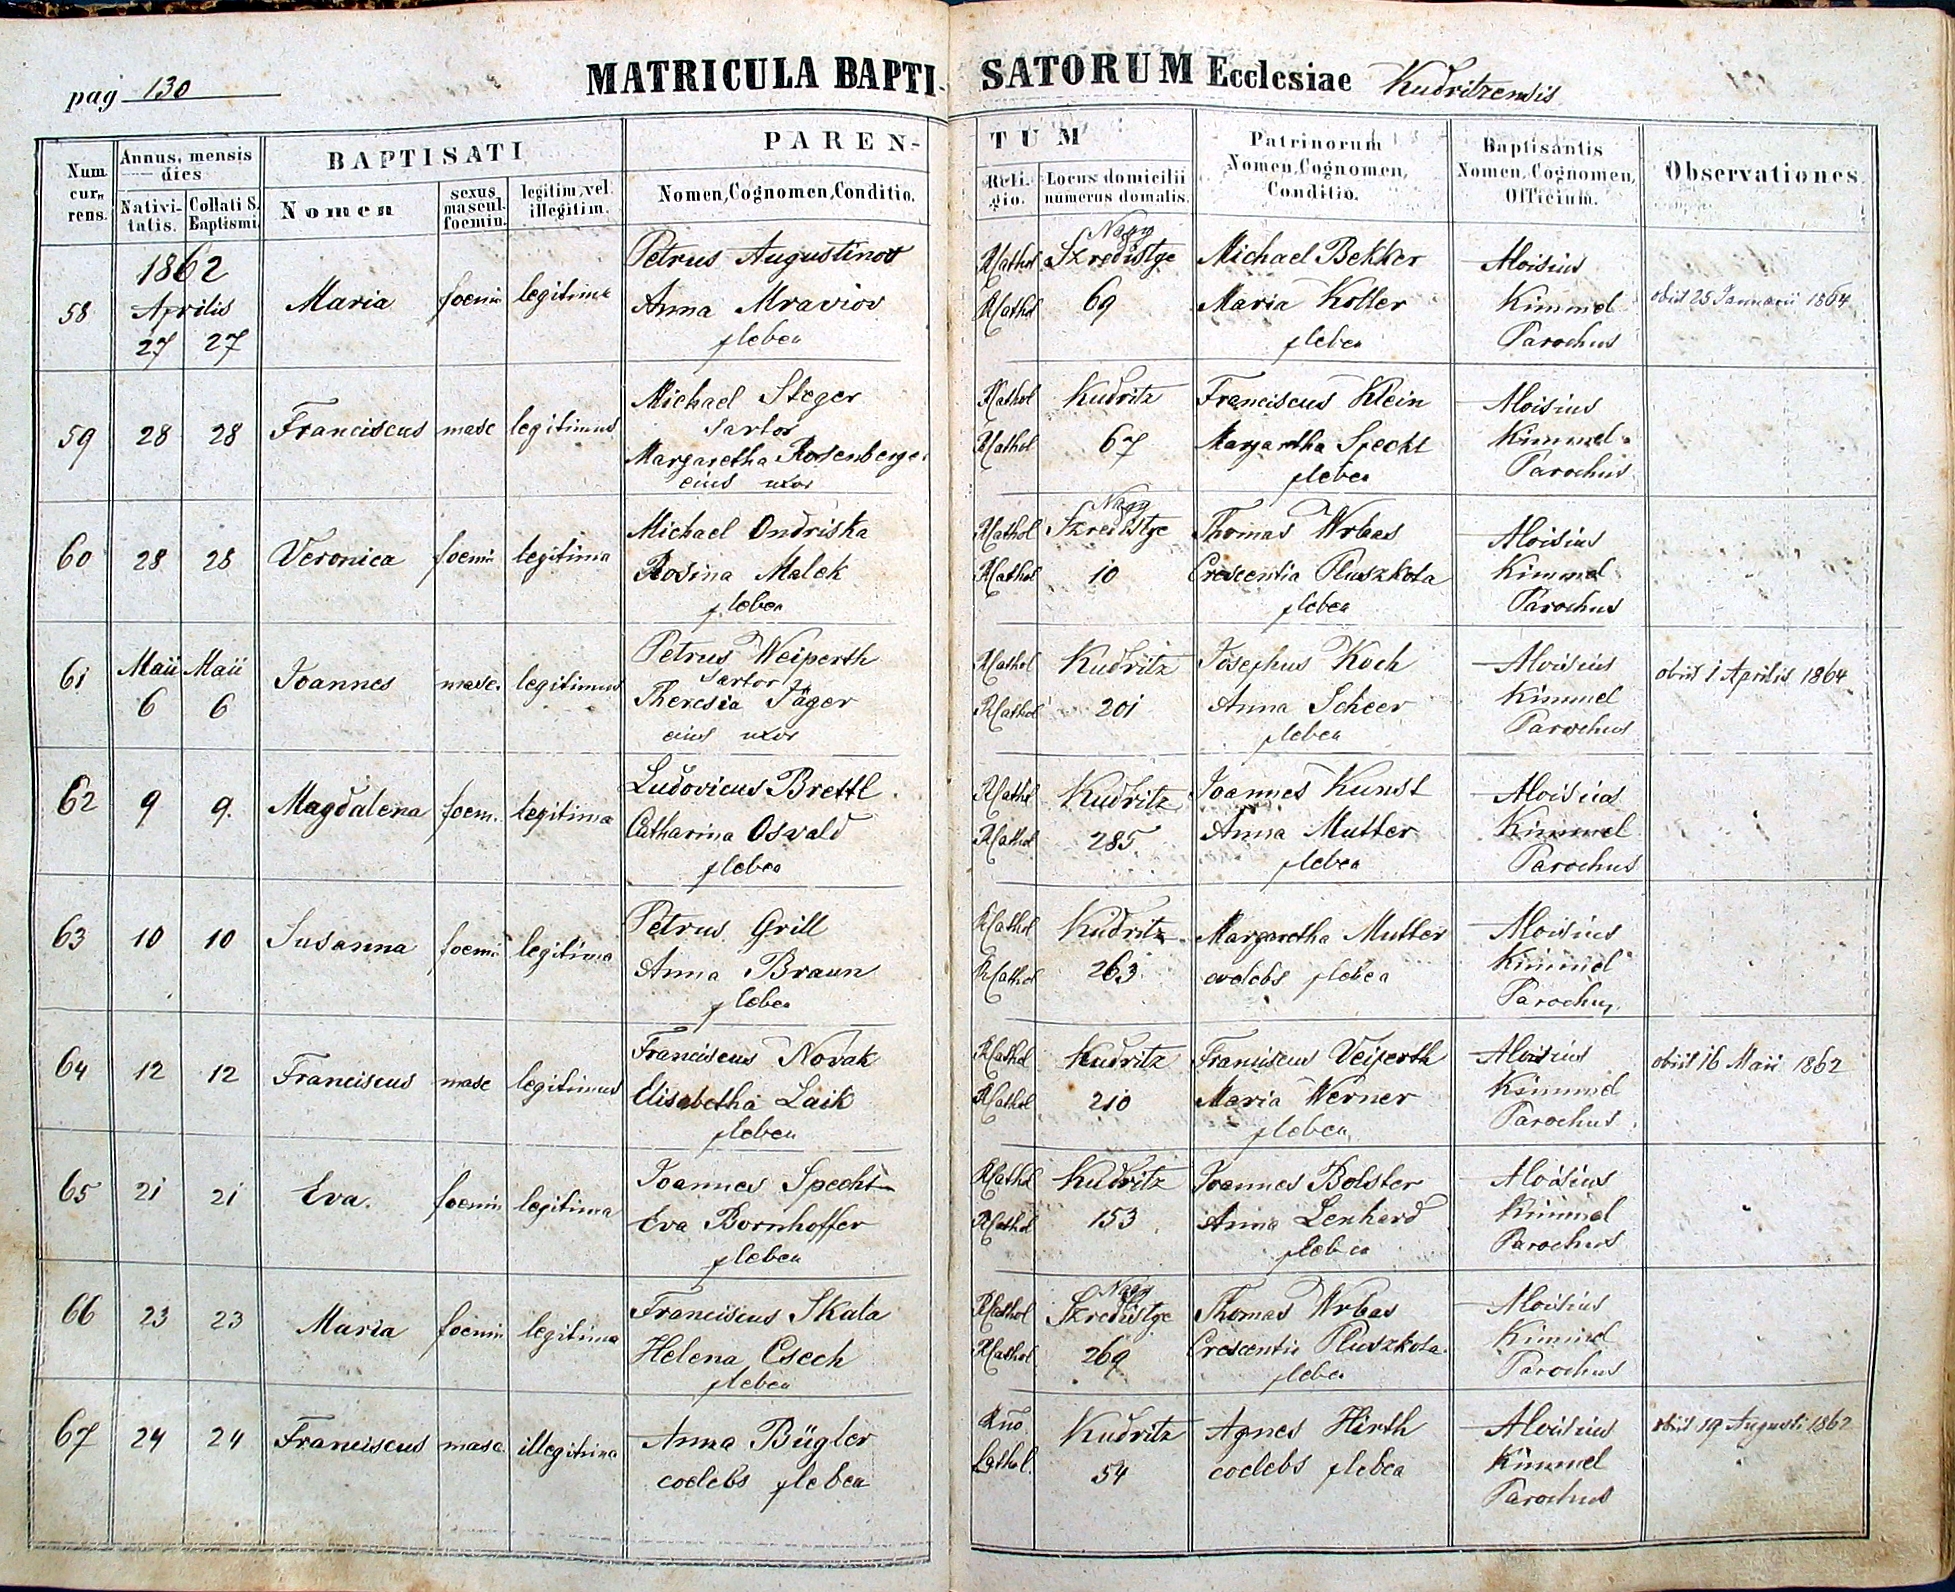 images/church_records/BIRTHS/1852-1870B/130